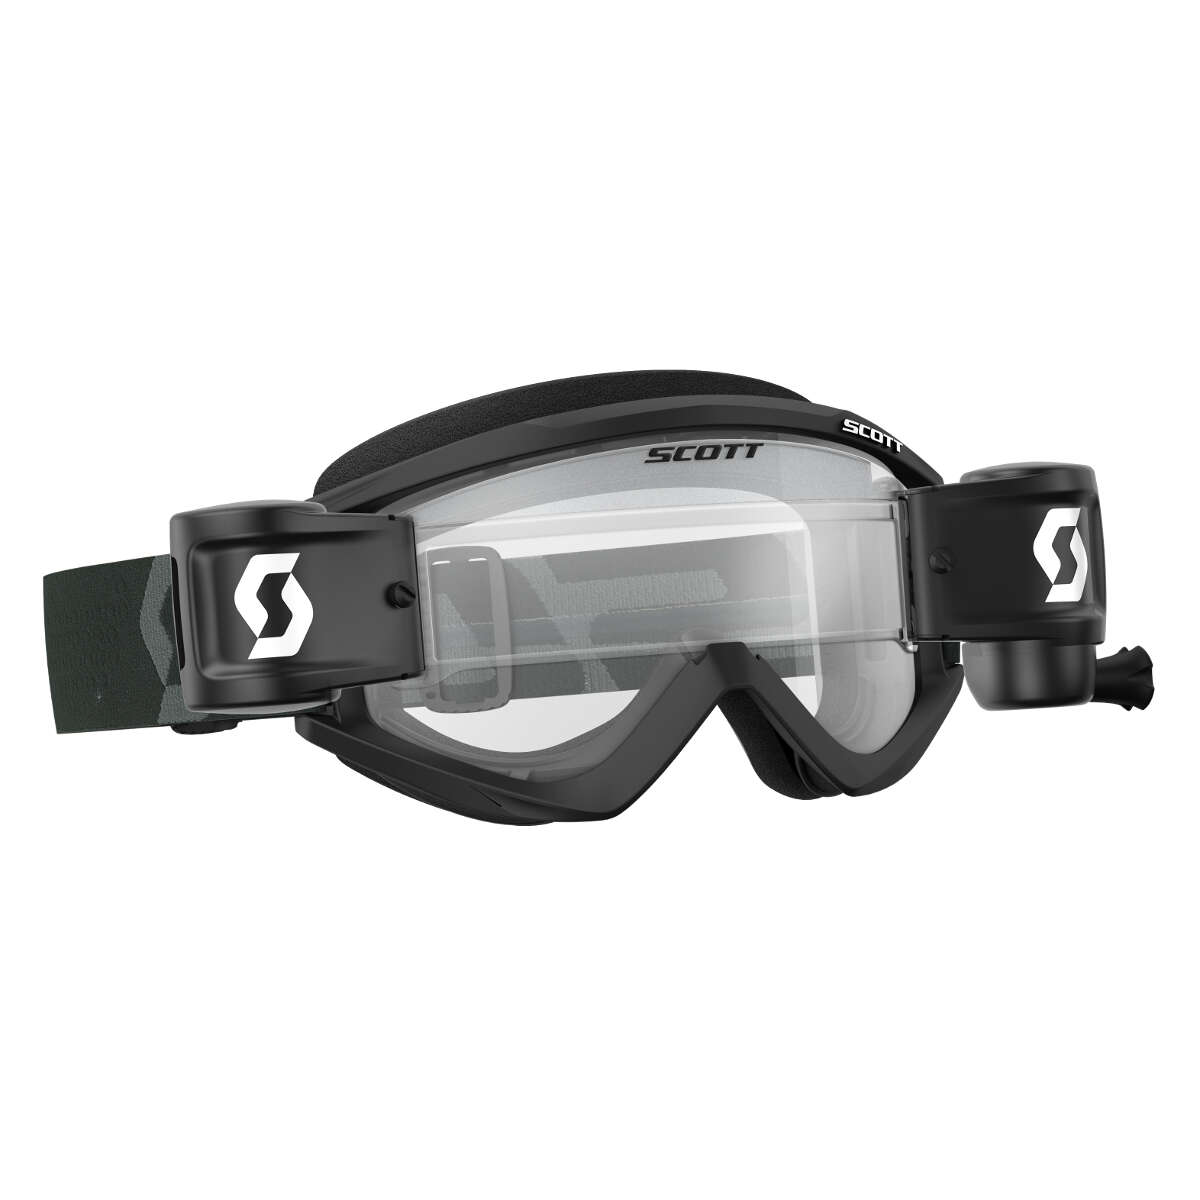 Scott Recoil Xi WFS Goggle Recoil Xi WFS Black/White - Clear Works Anti-Fog